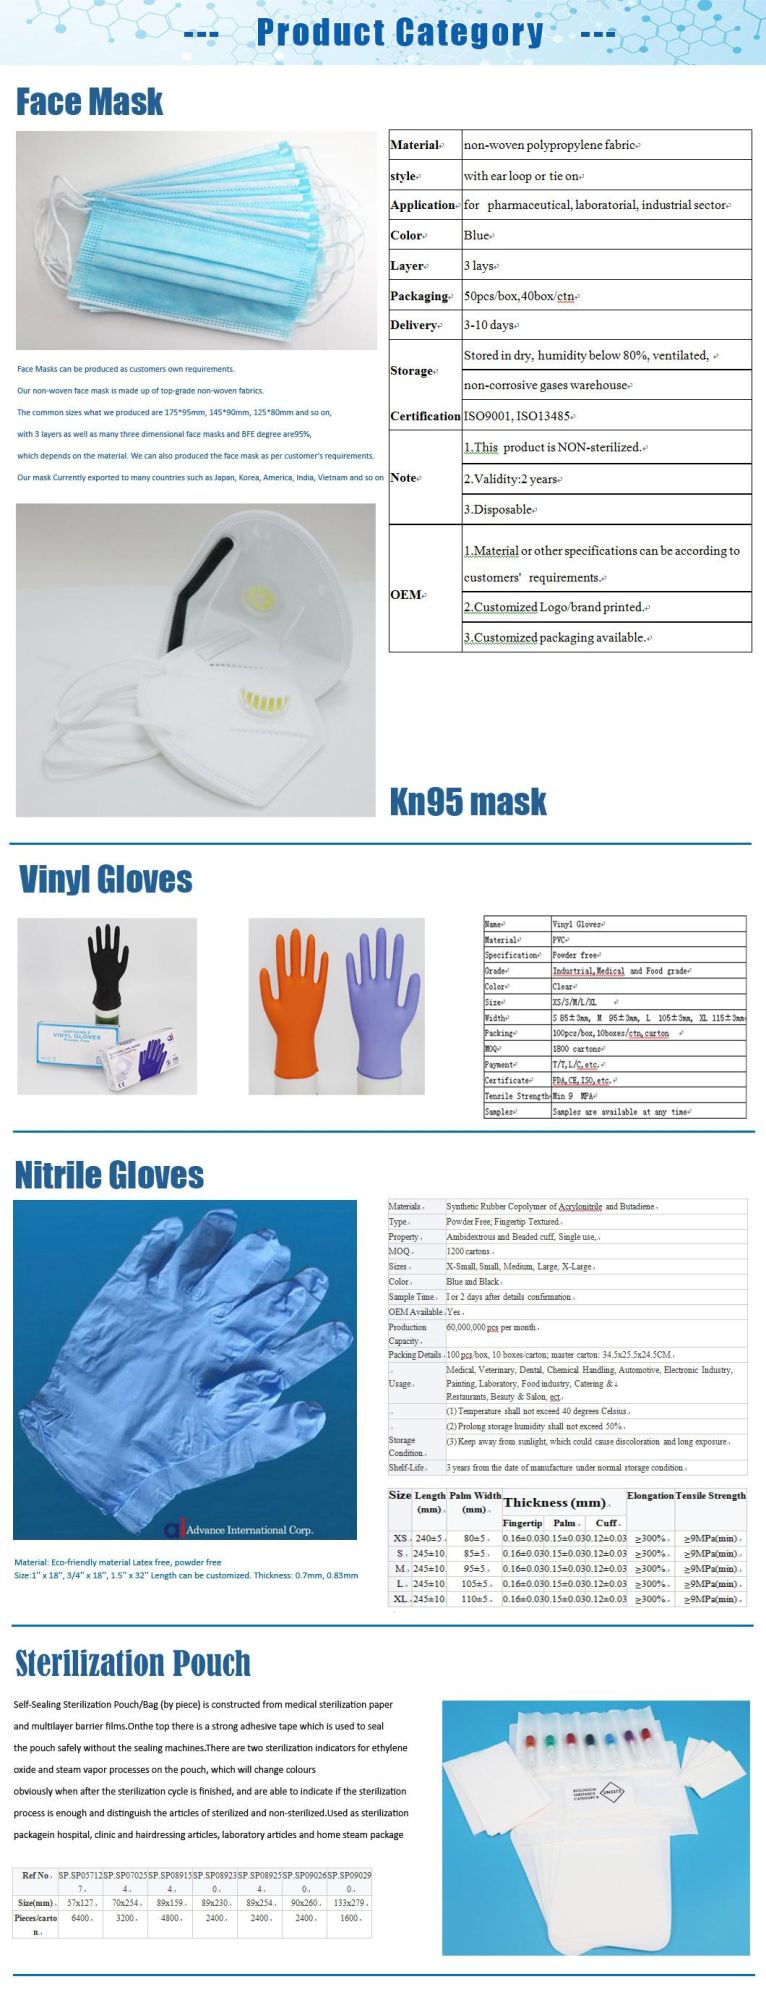 Other PVC Gloves Disposable Safety Medical Examination Vinyl Gloves